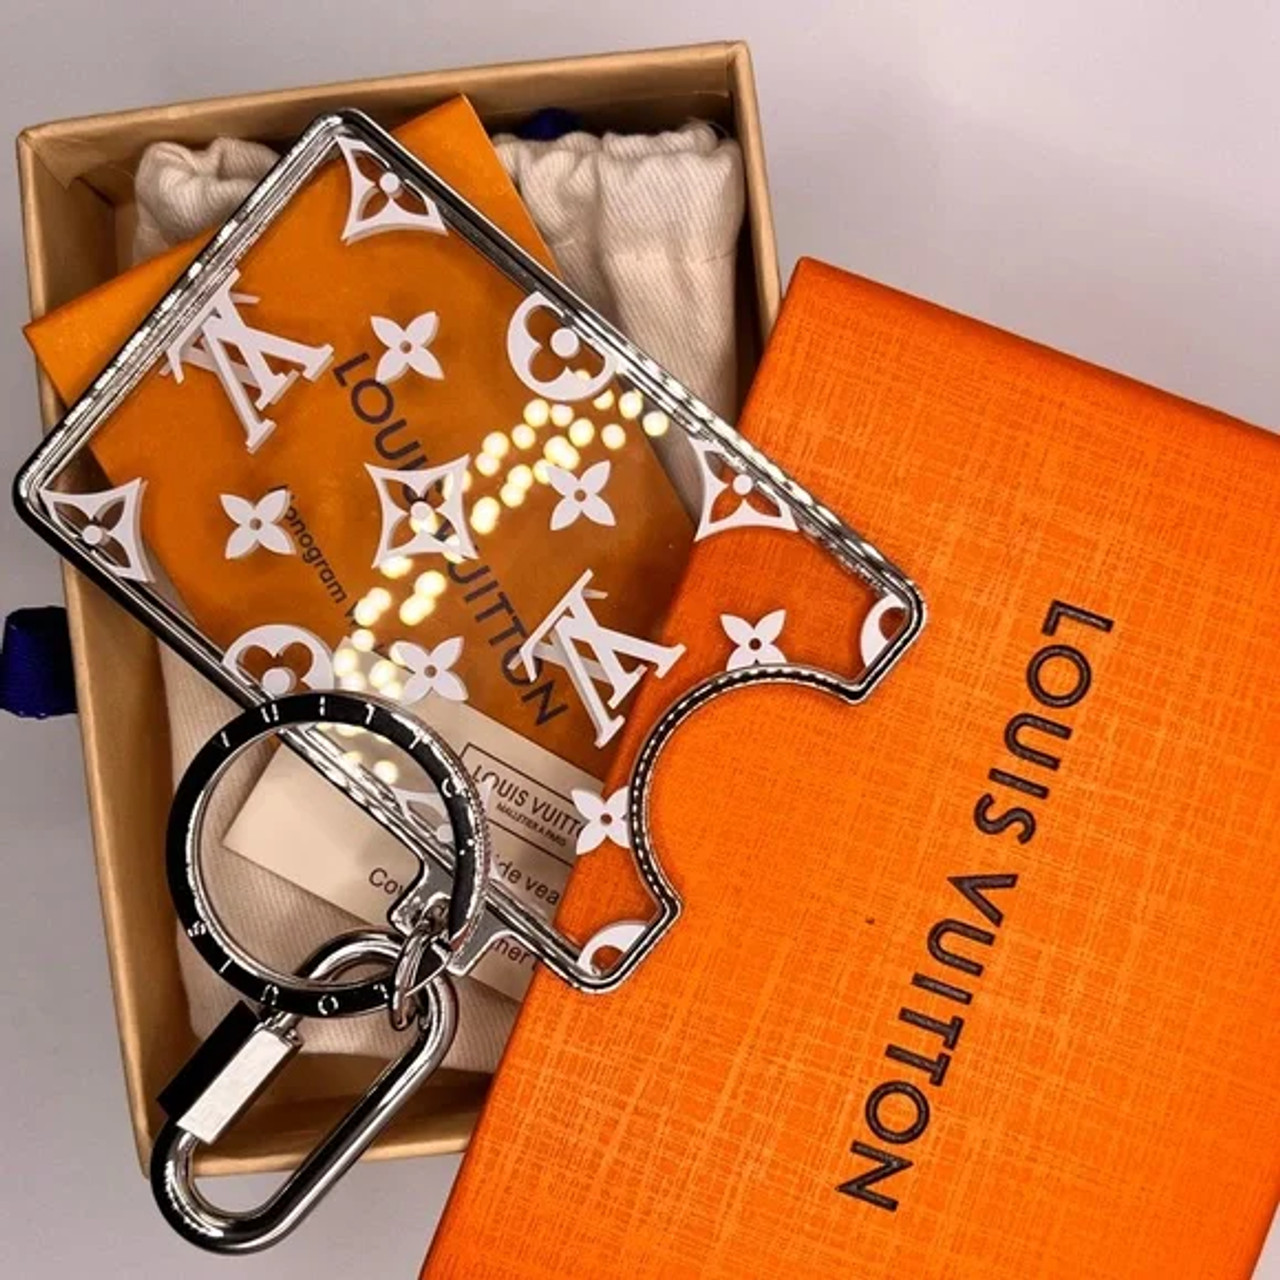 Shop Louis Vuitton MONOGRAM Lv prism id holder bag charm and key holder  (M69299) by Leeway